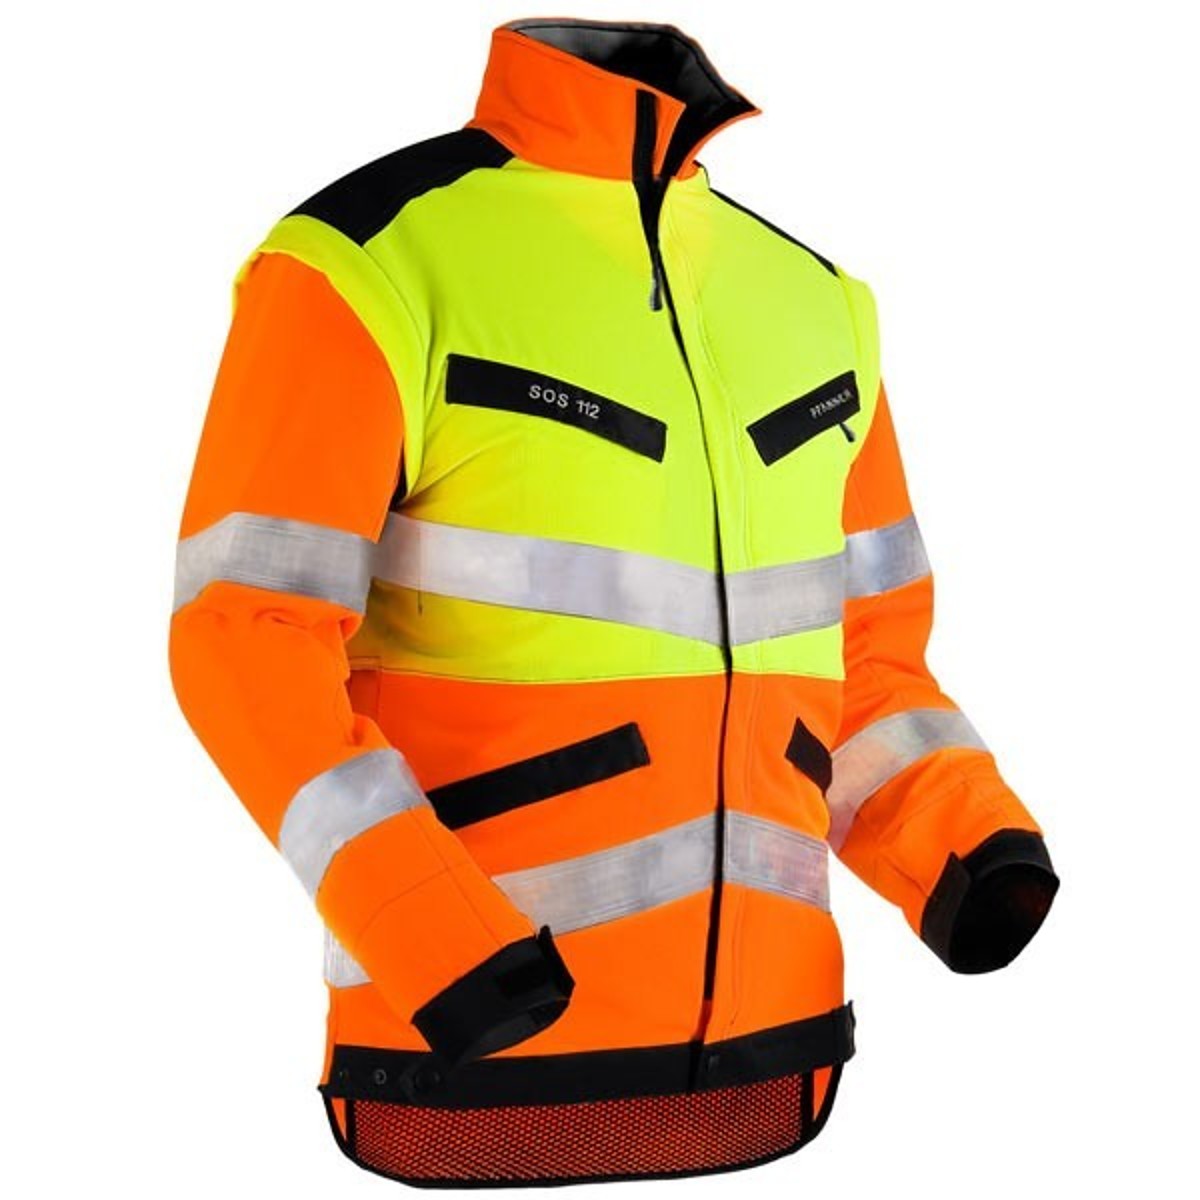 OREGON Yukon Forstjacke Jacke  in Warnfarbe Orange Stretchgewebe   Größe XXL 